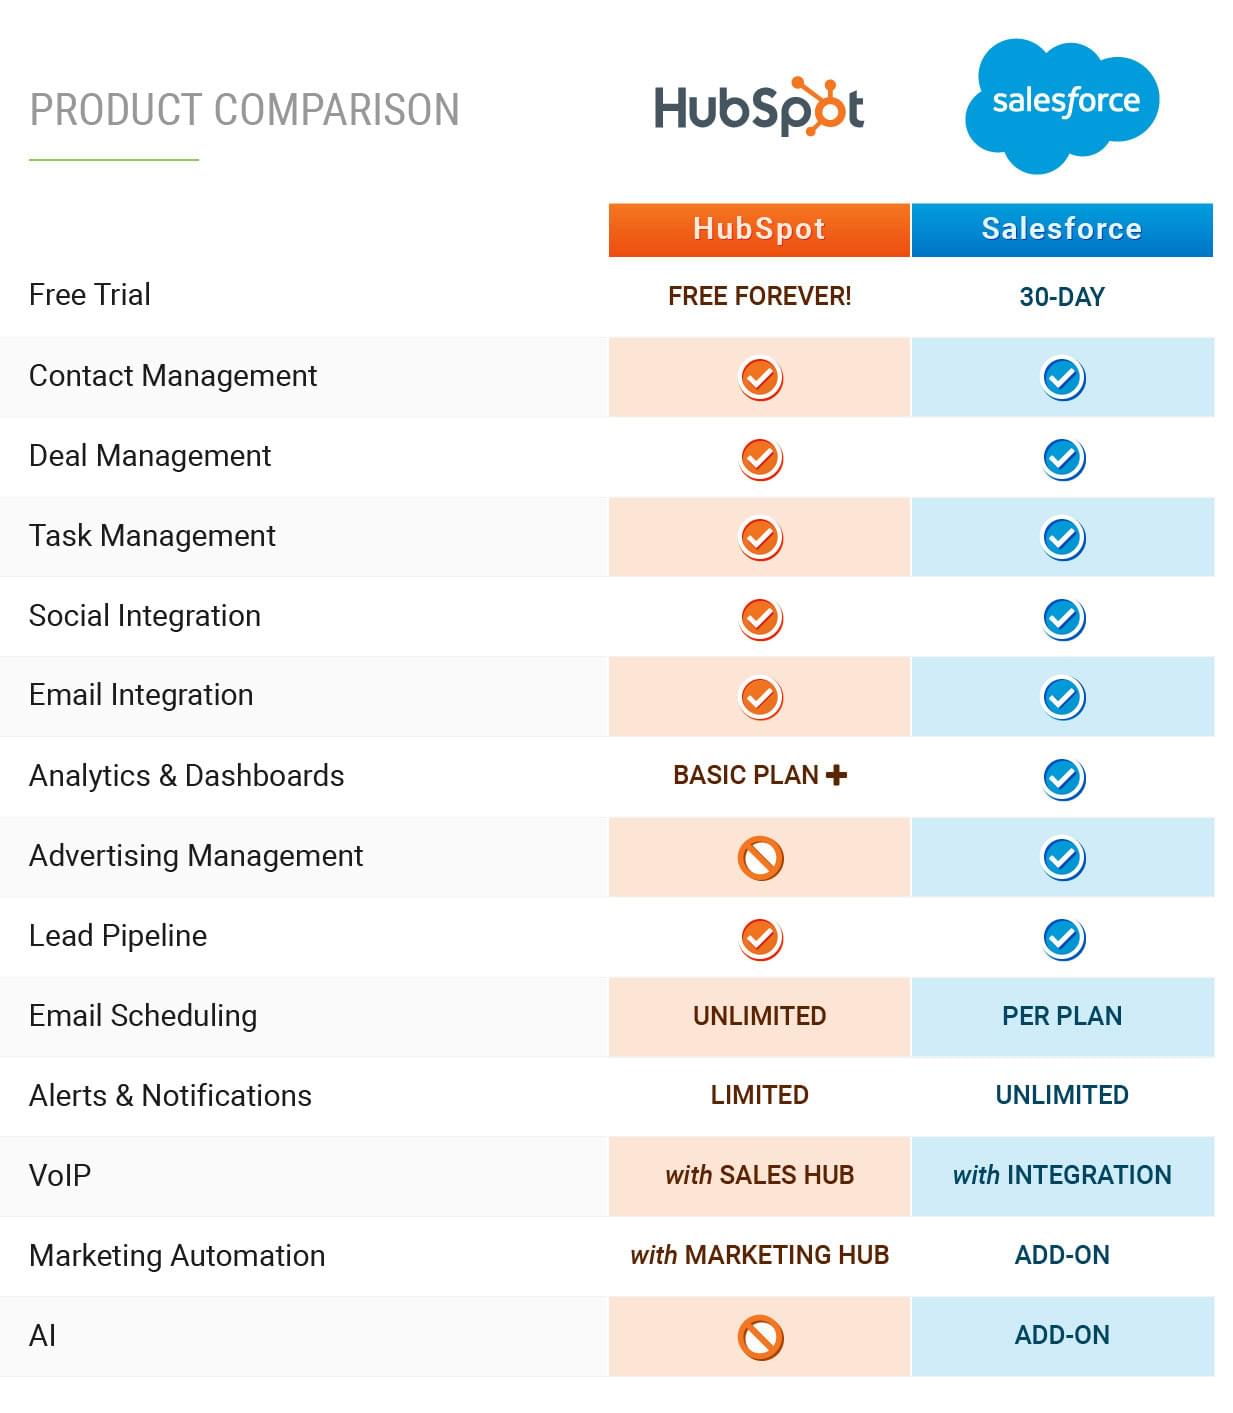 hubspot vs salesforce comparison chart